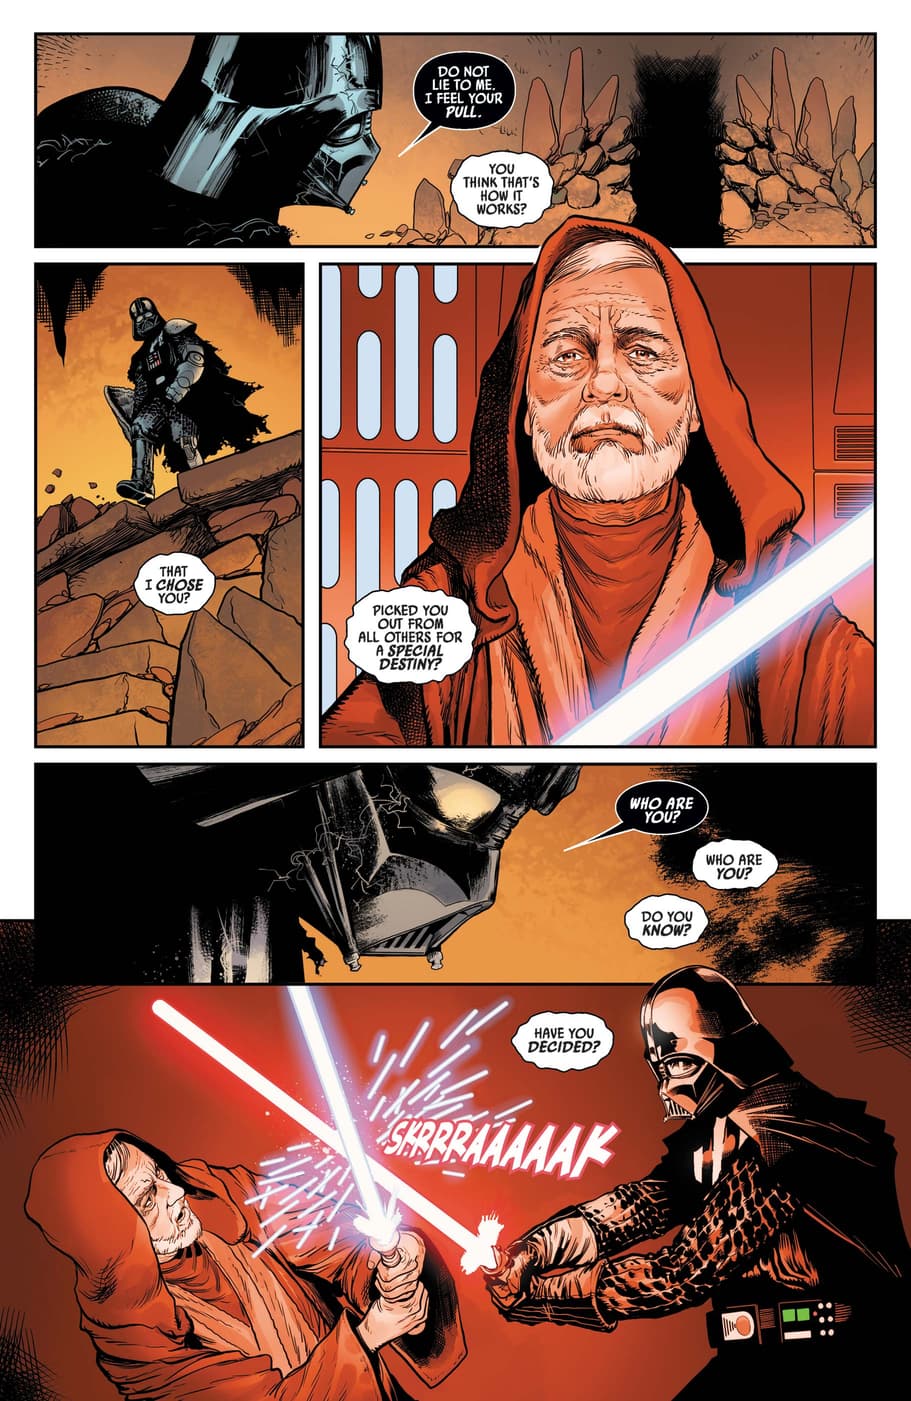 Darth Vader strikes down Obi-Wan Kenobi.